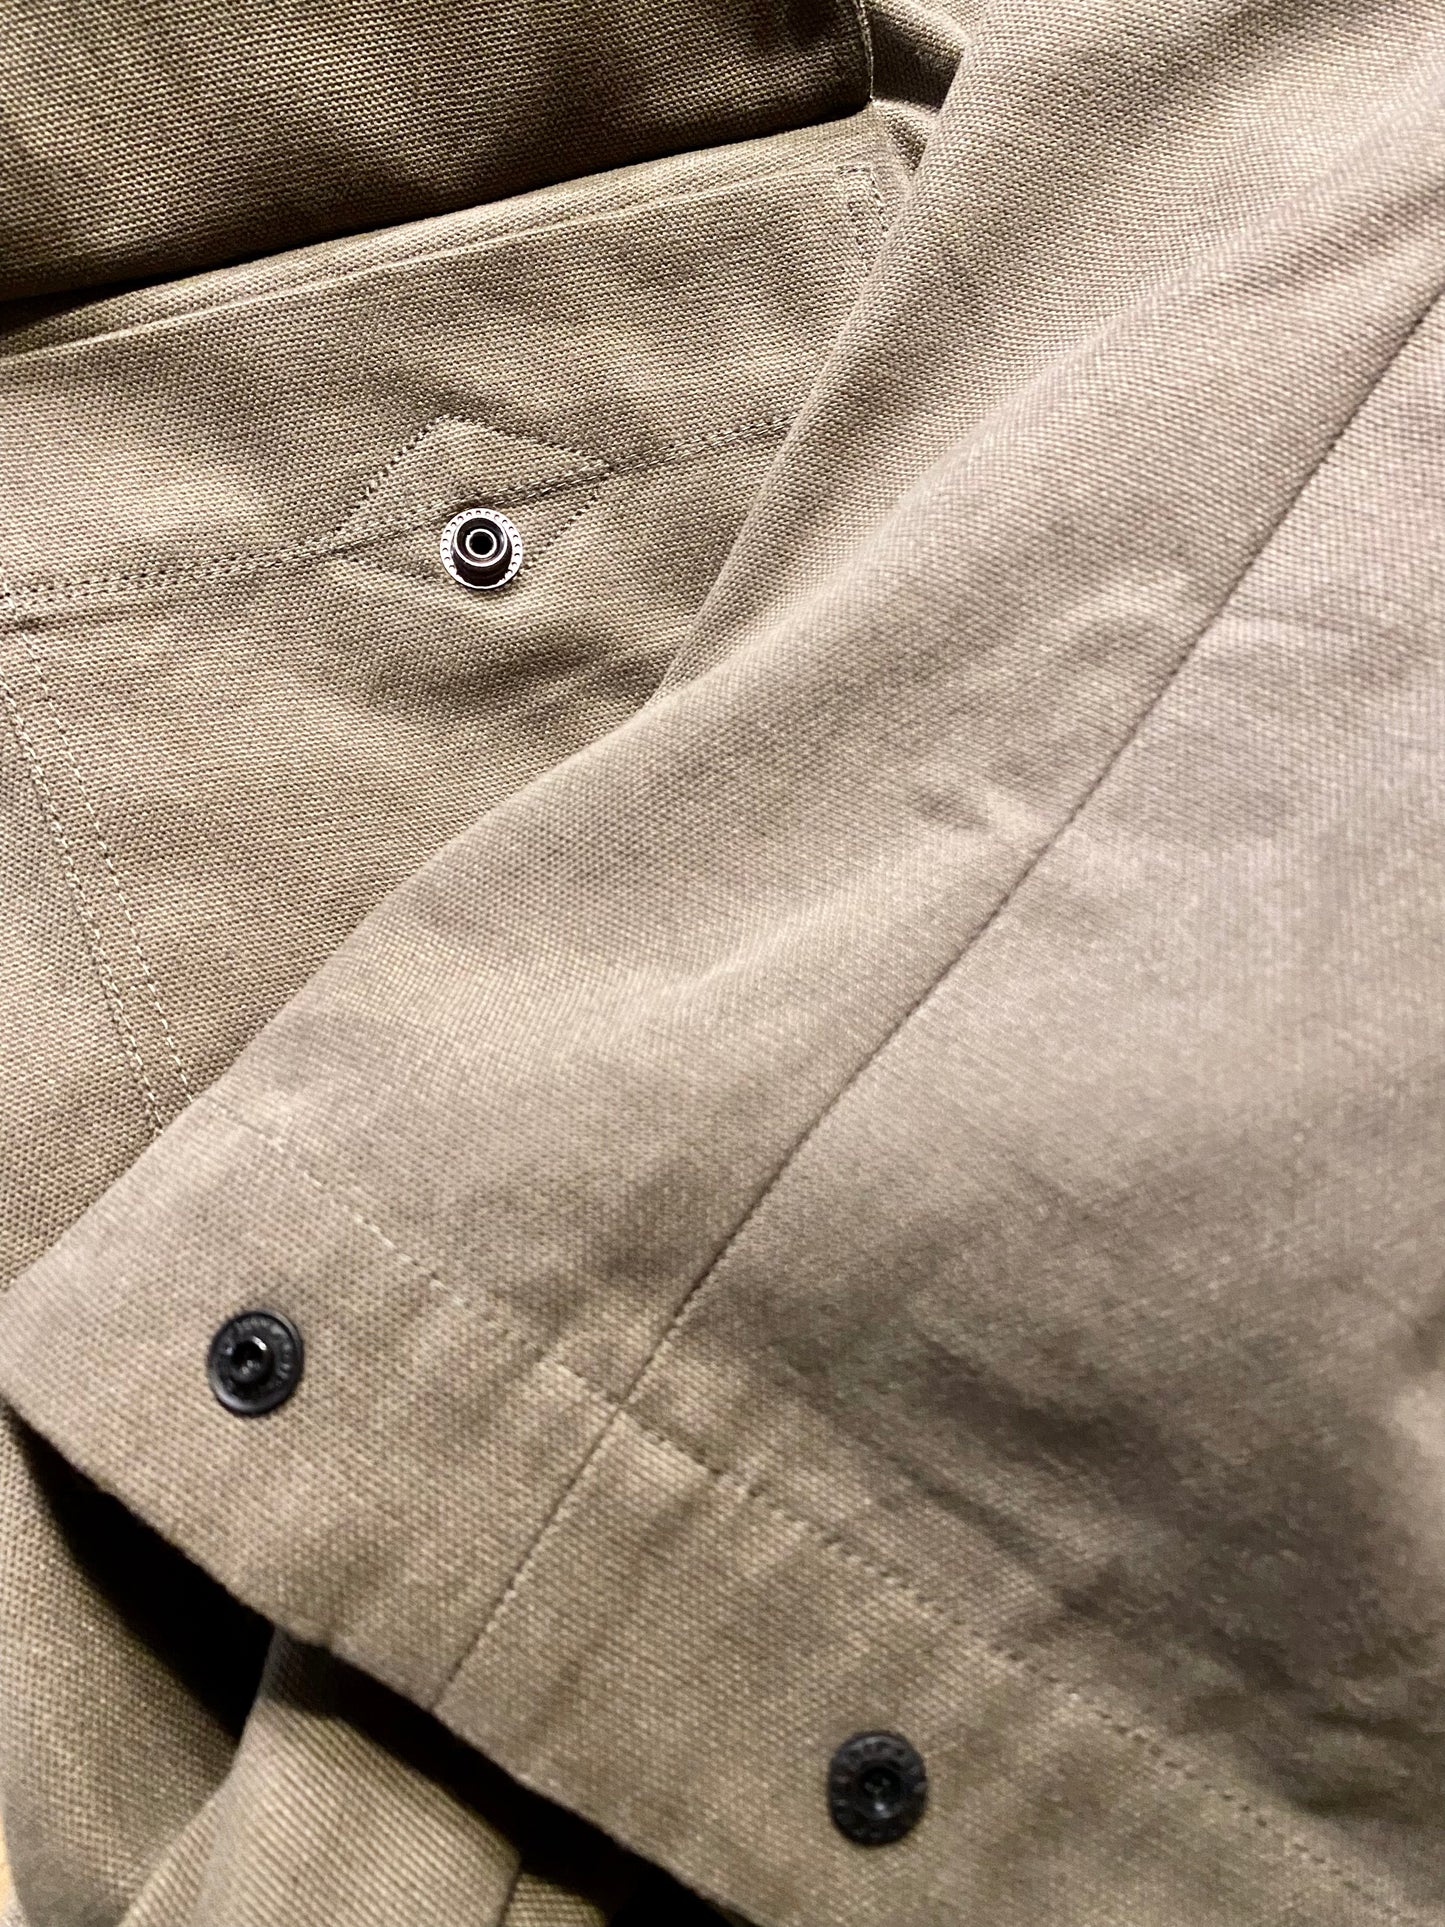 Cumbrae trouser detail